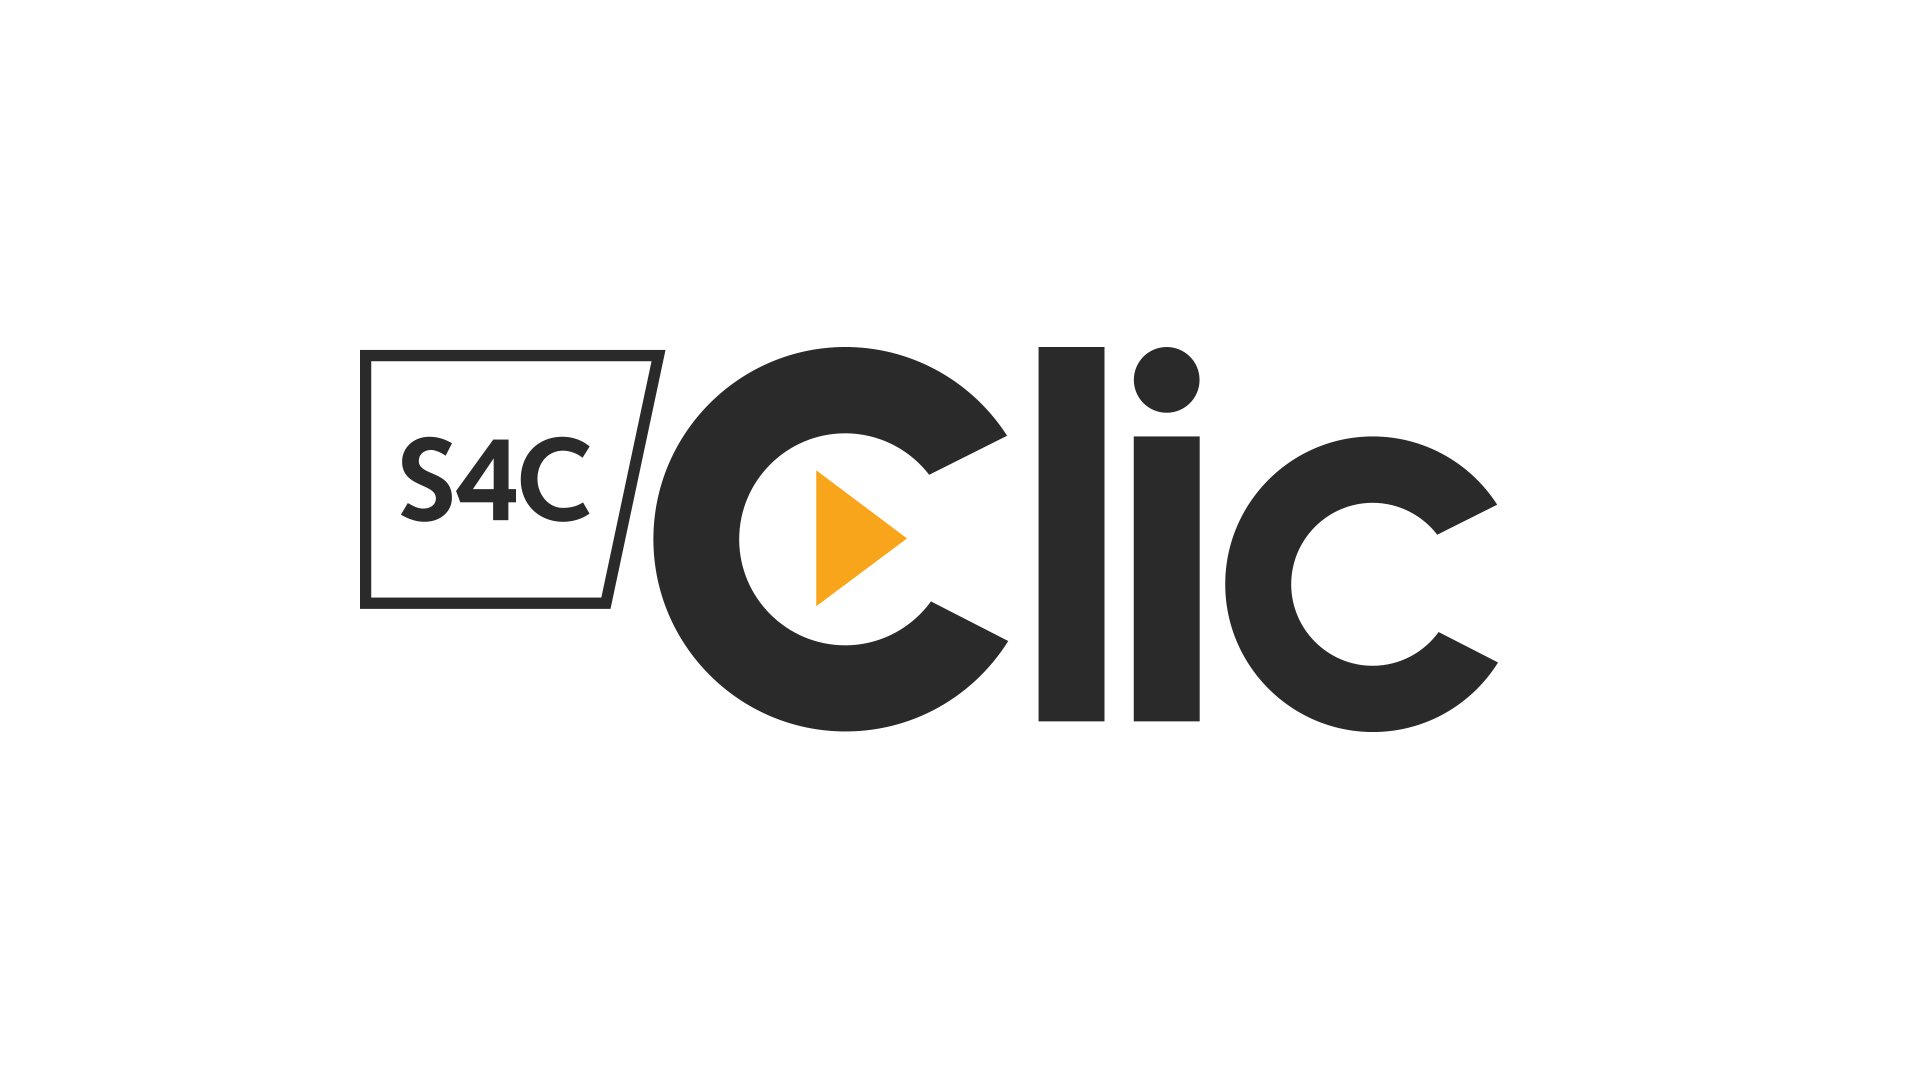 S4C Clic reaches 250,000 registrations